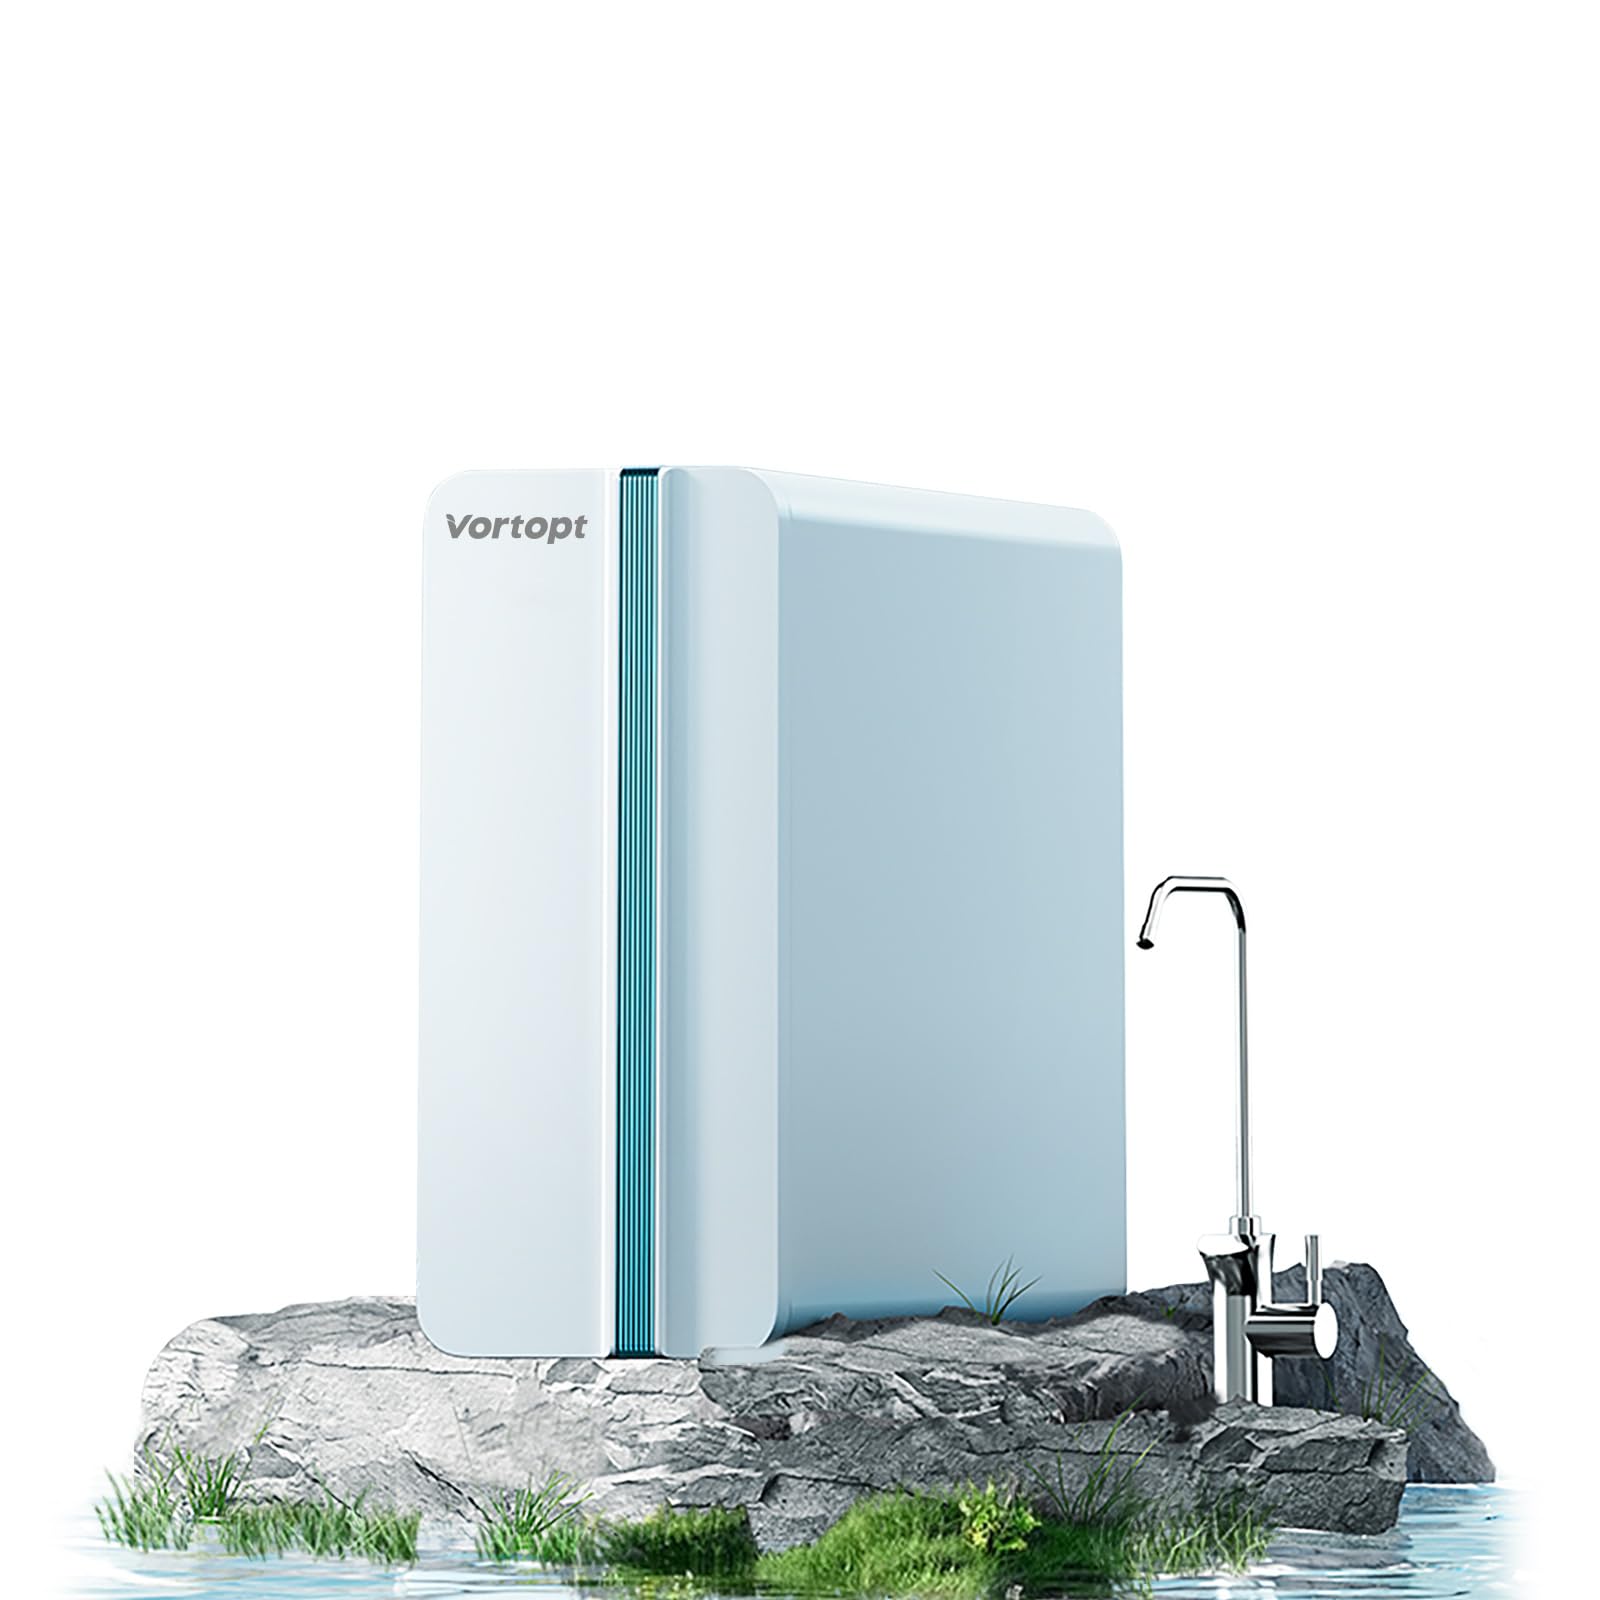 DR5-1000G-Vortopt Reverse Osmosis Water Filter -